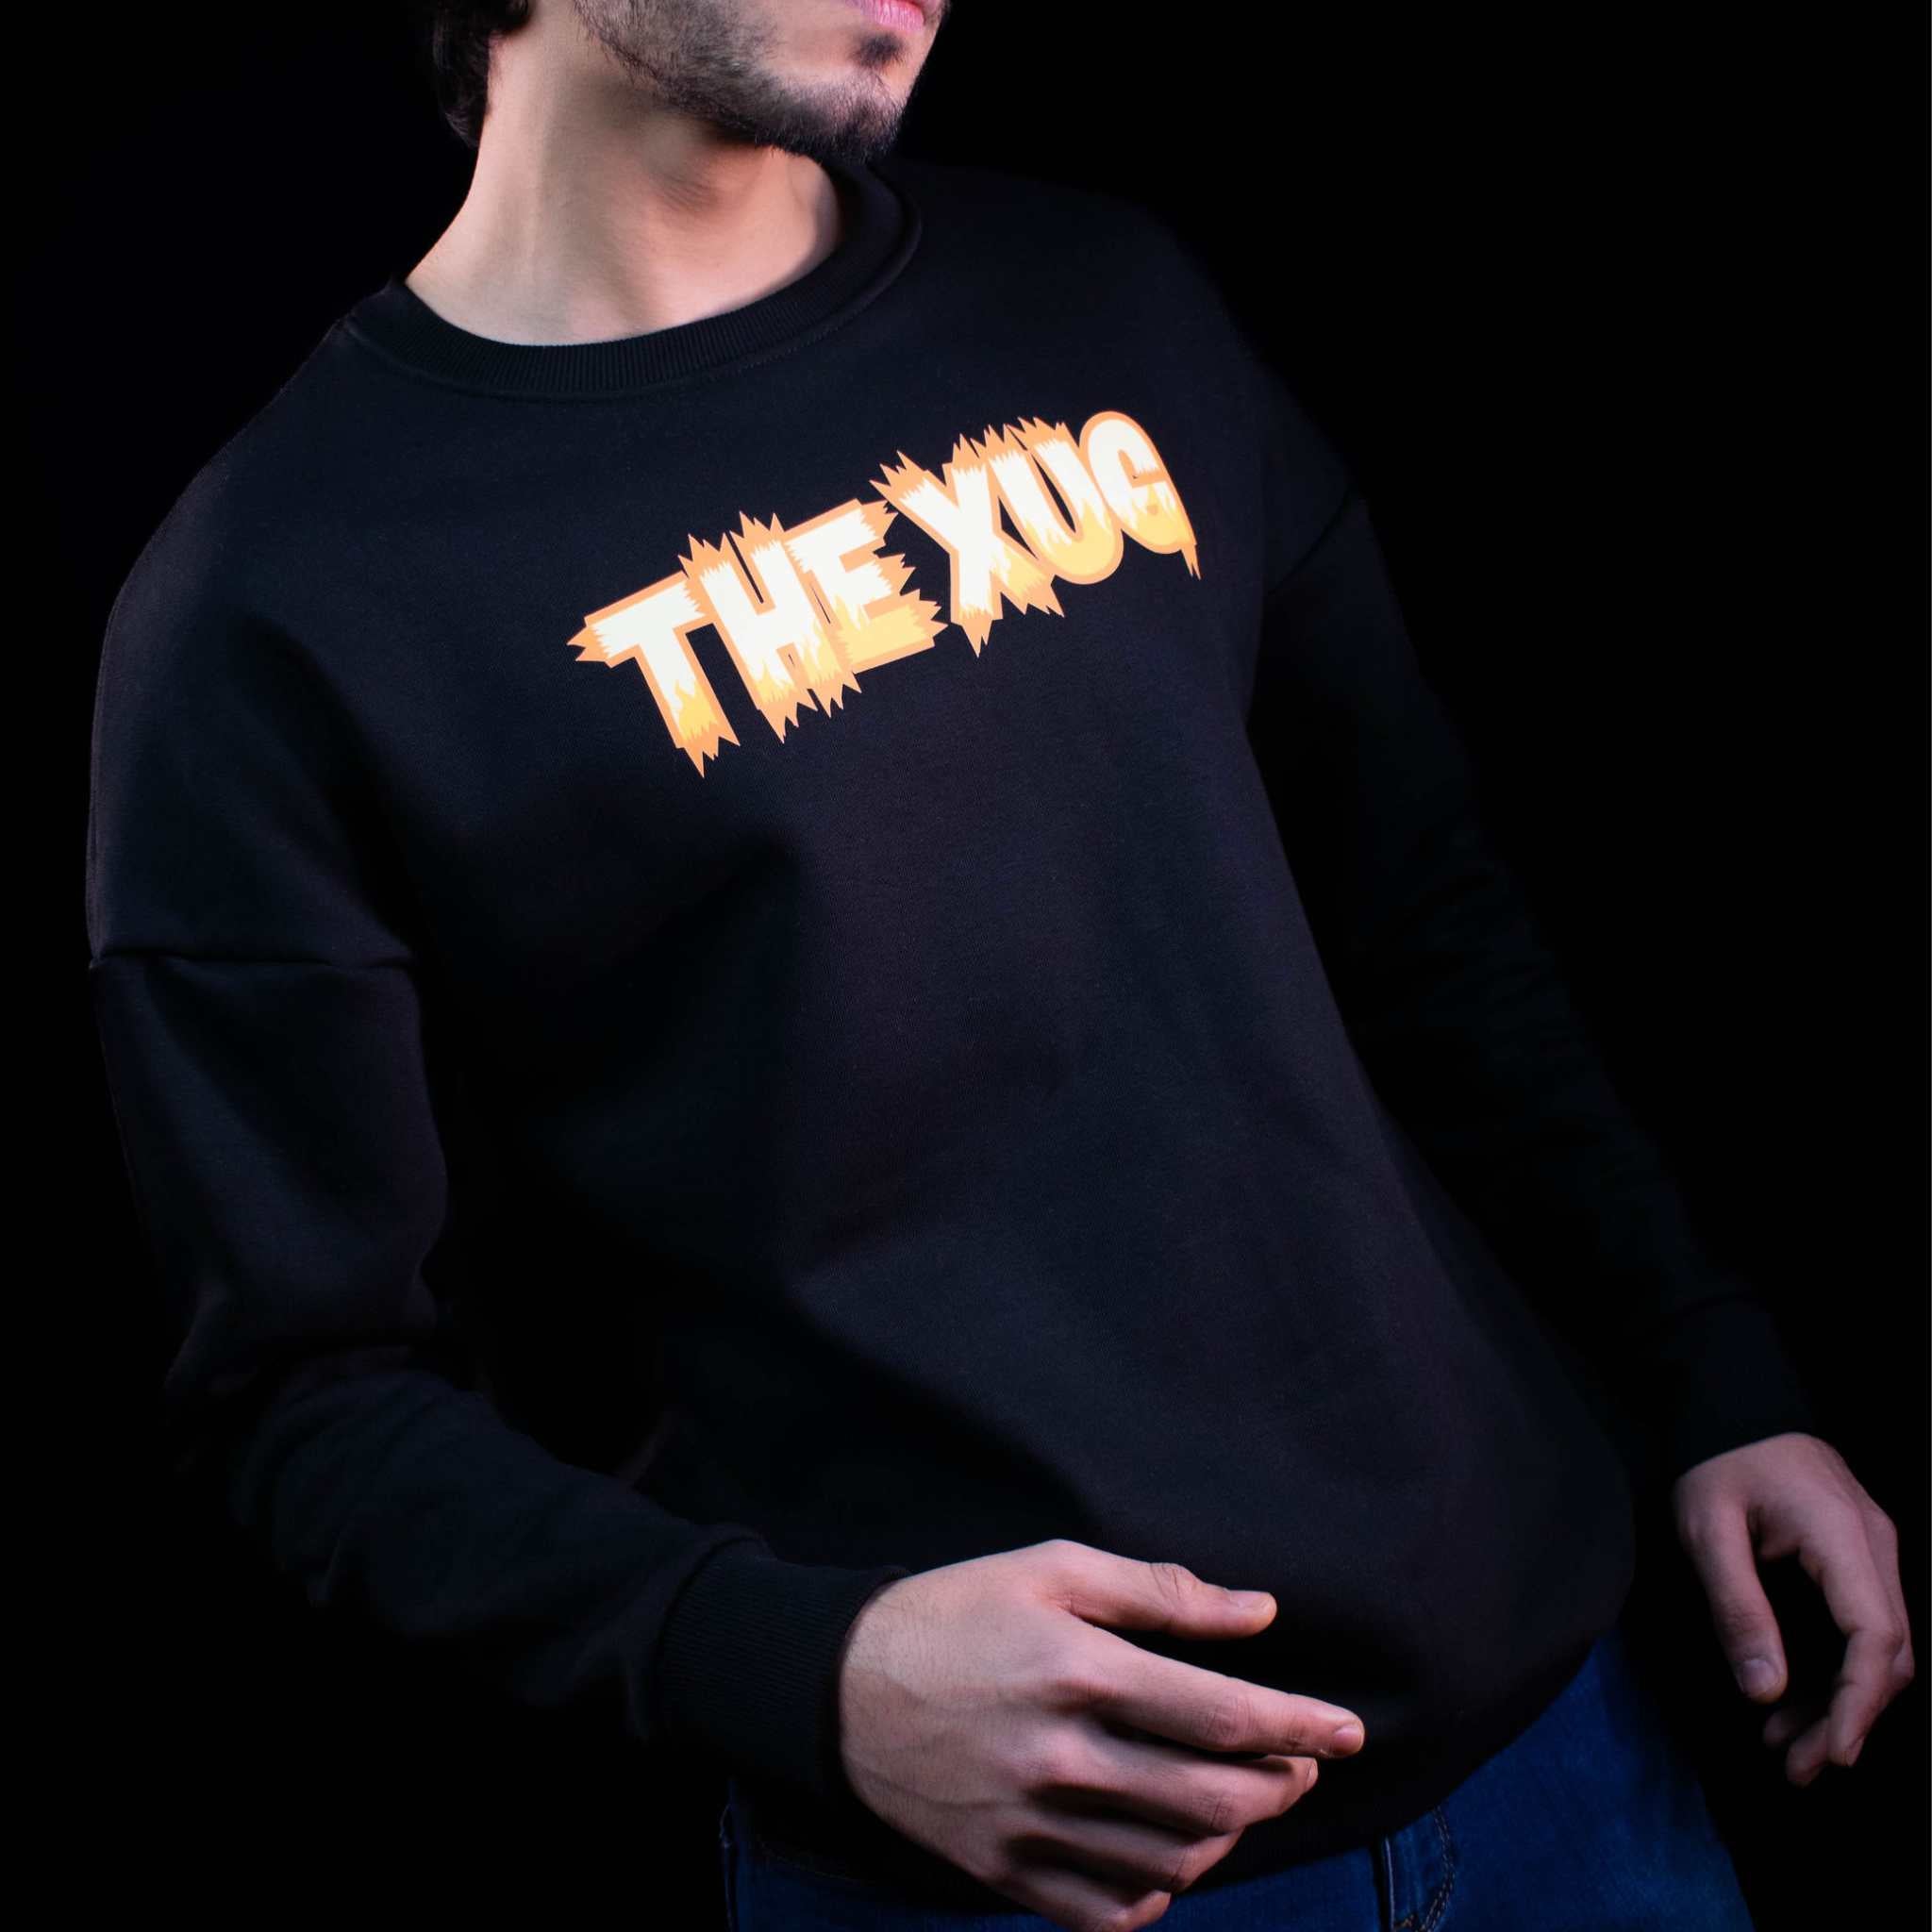 naruto augmented reality sweatshirt by the xug india